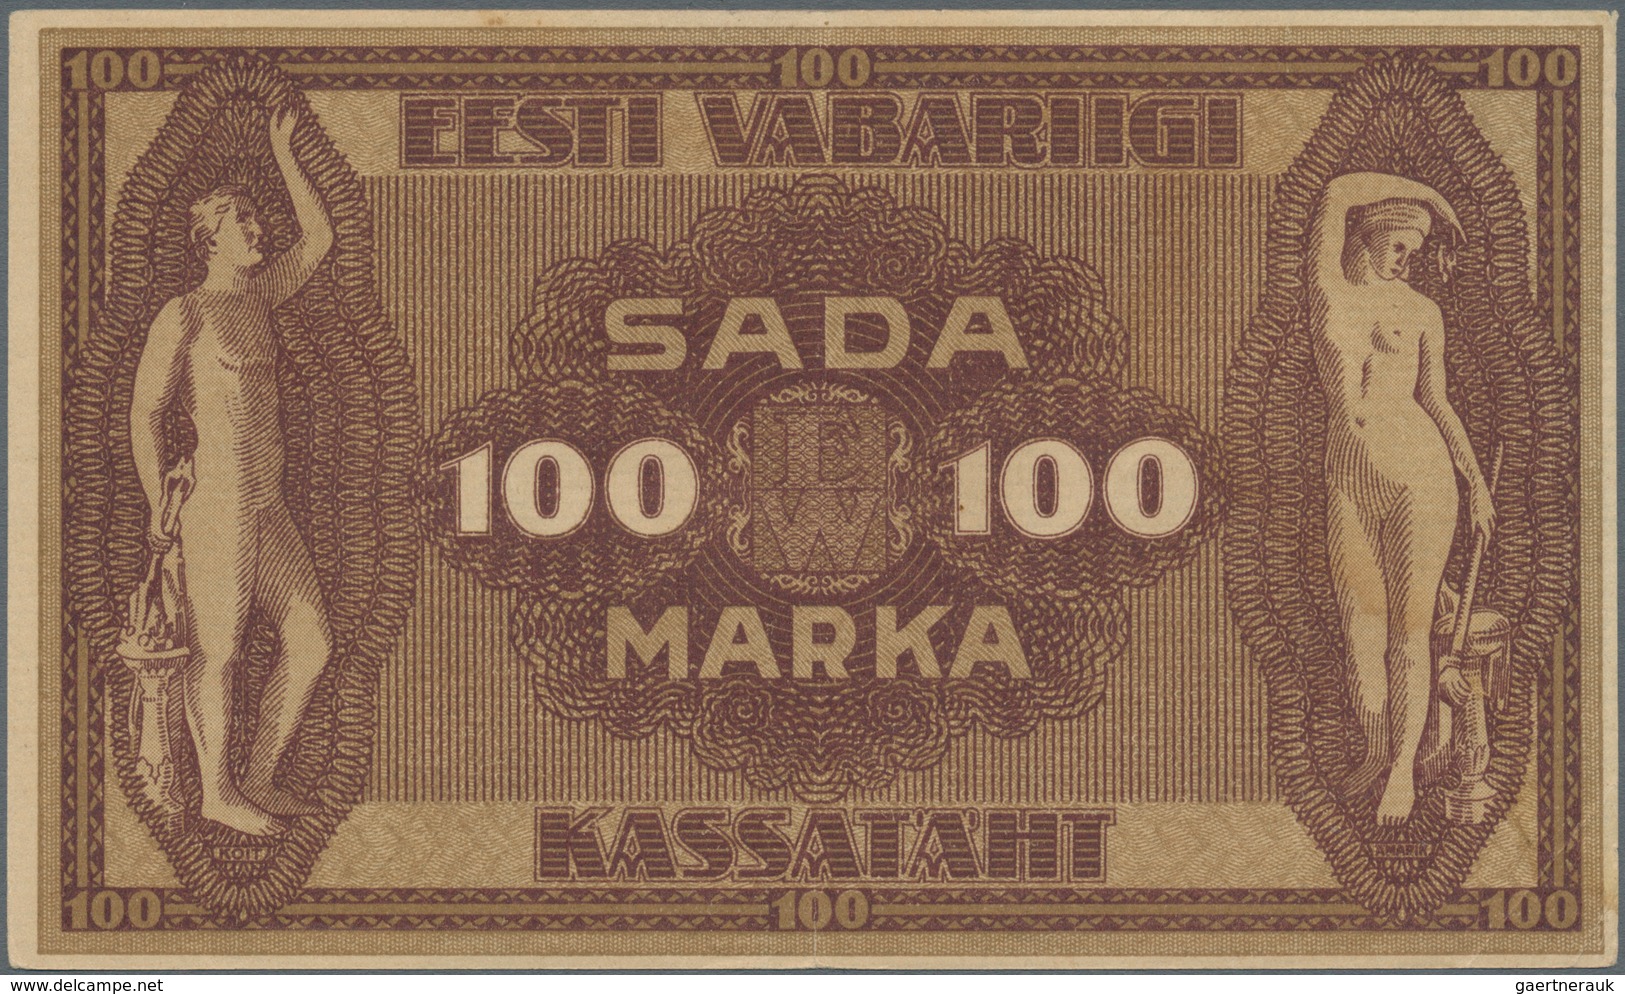 Estonia / Estland: Highly Rare Pair Of The 100 Marka 1919, One Without "Seeria" And Watermark: Horiz - Estland